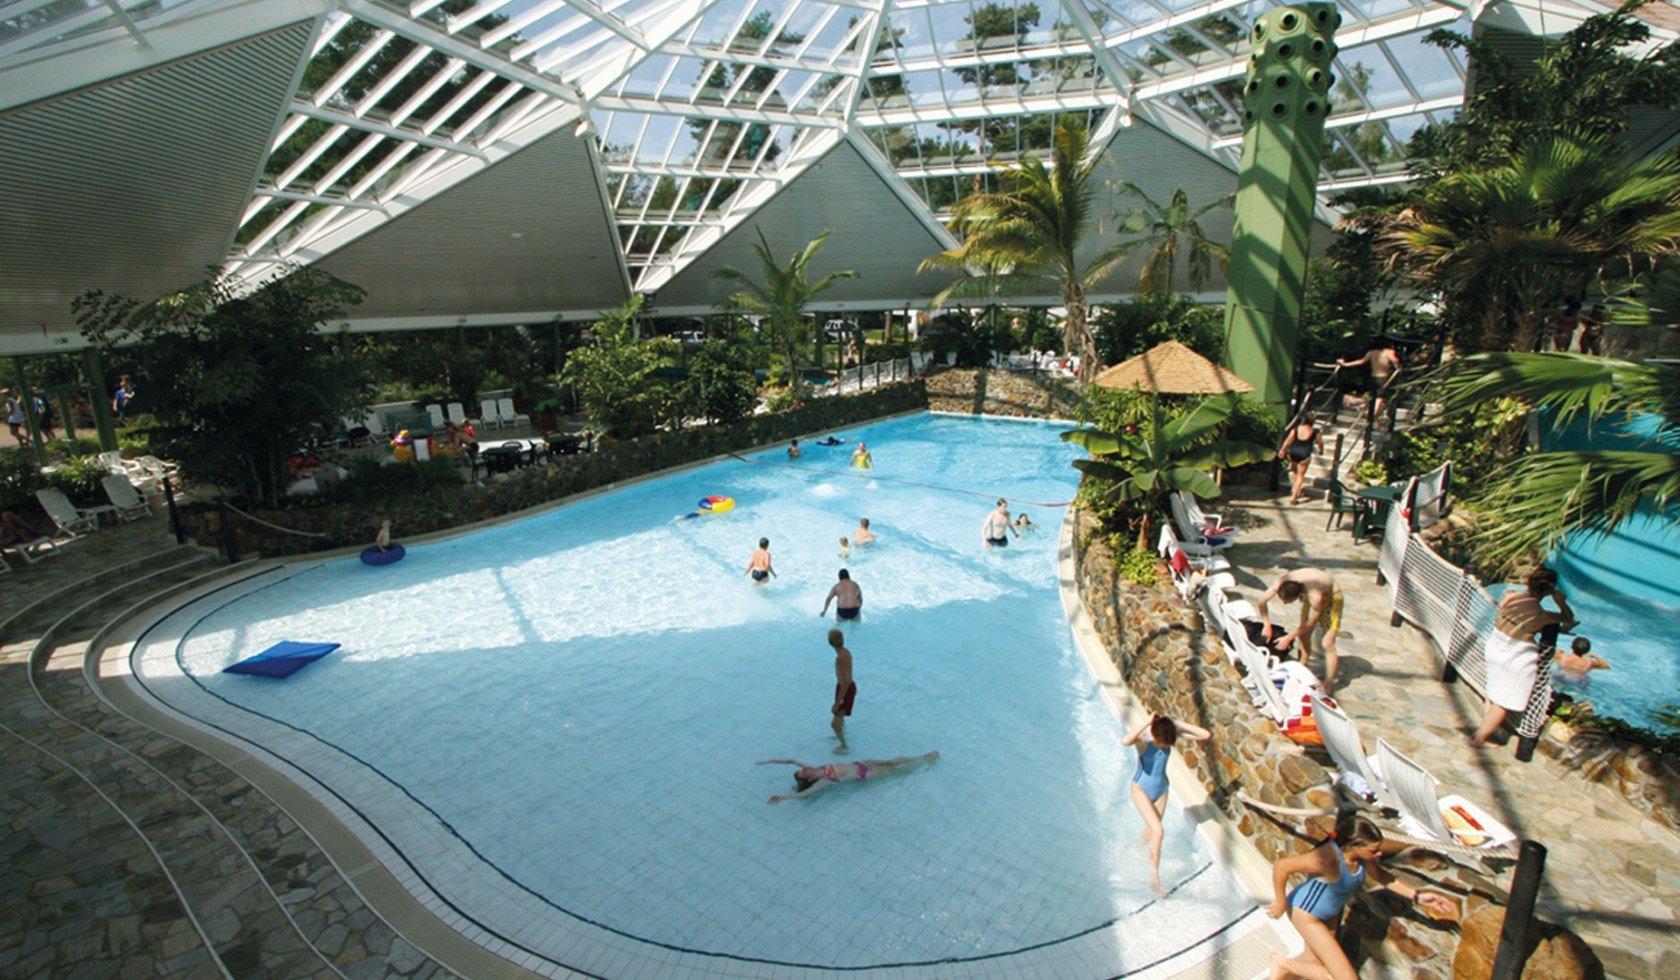 Swimming pool, © Südsee-Camp